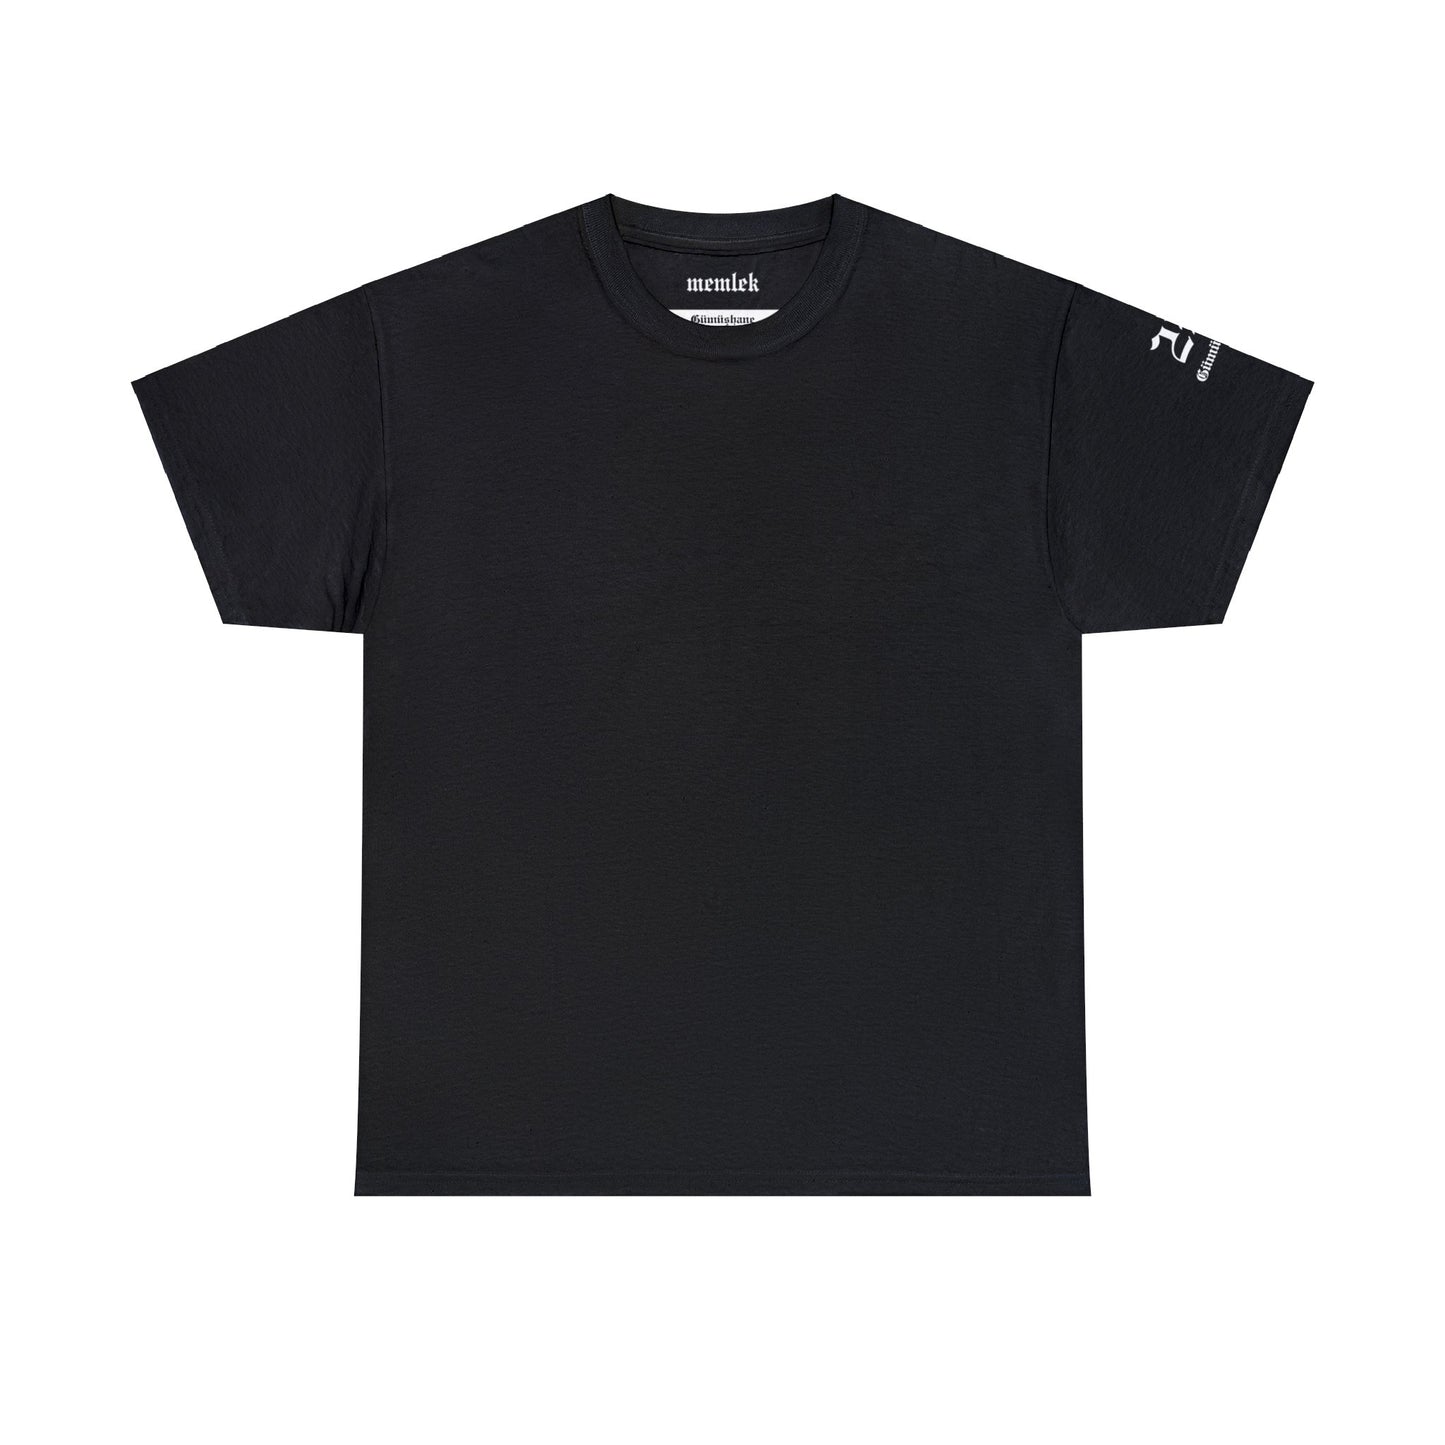 İlçem - 29 Gümüşhane - T-Shirt - Back Print - Black